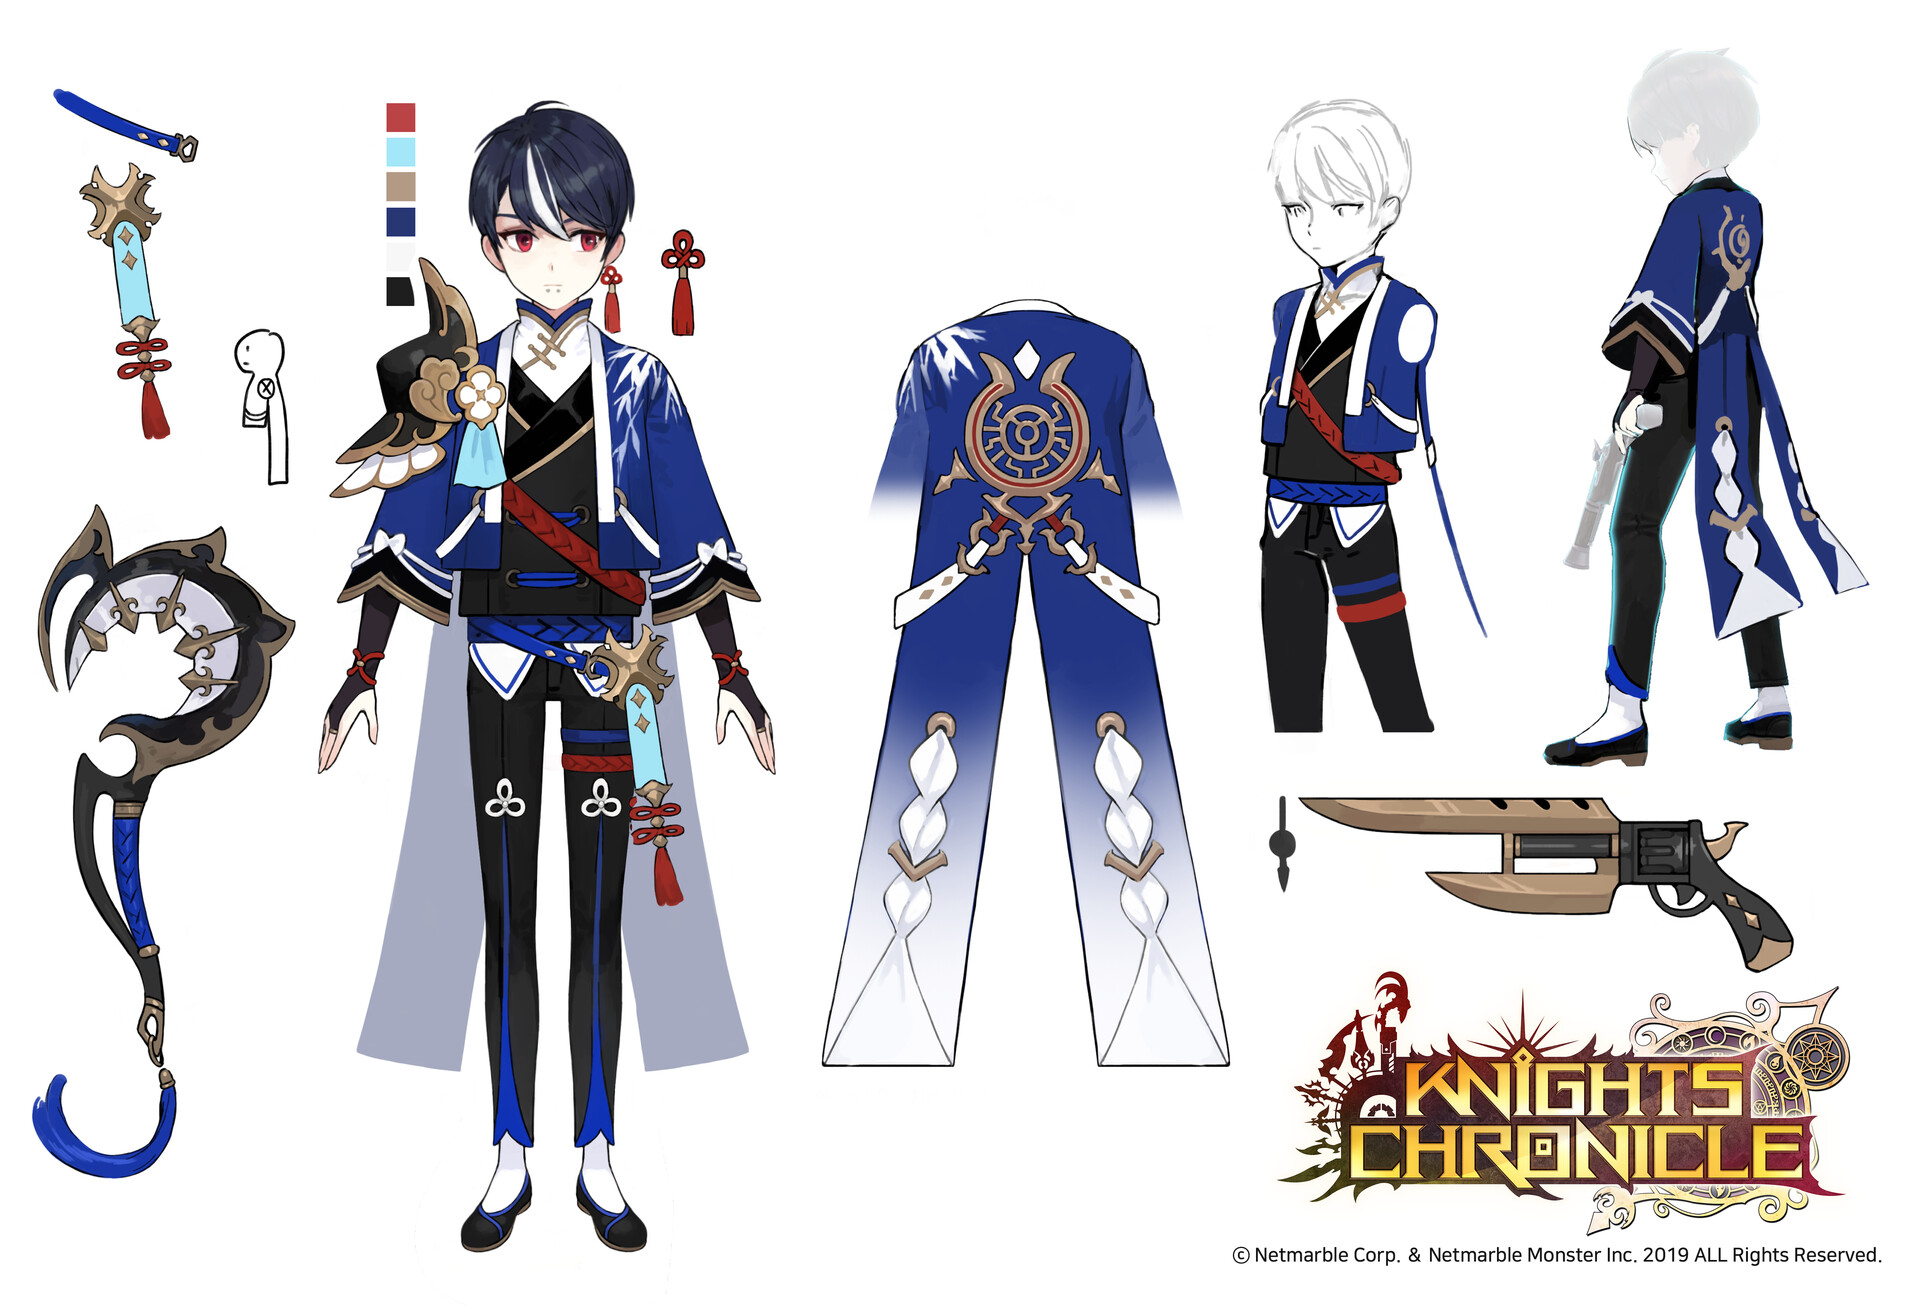 soyoong jun - knights chronicle character concept2